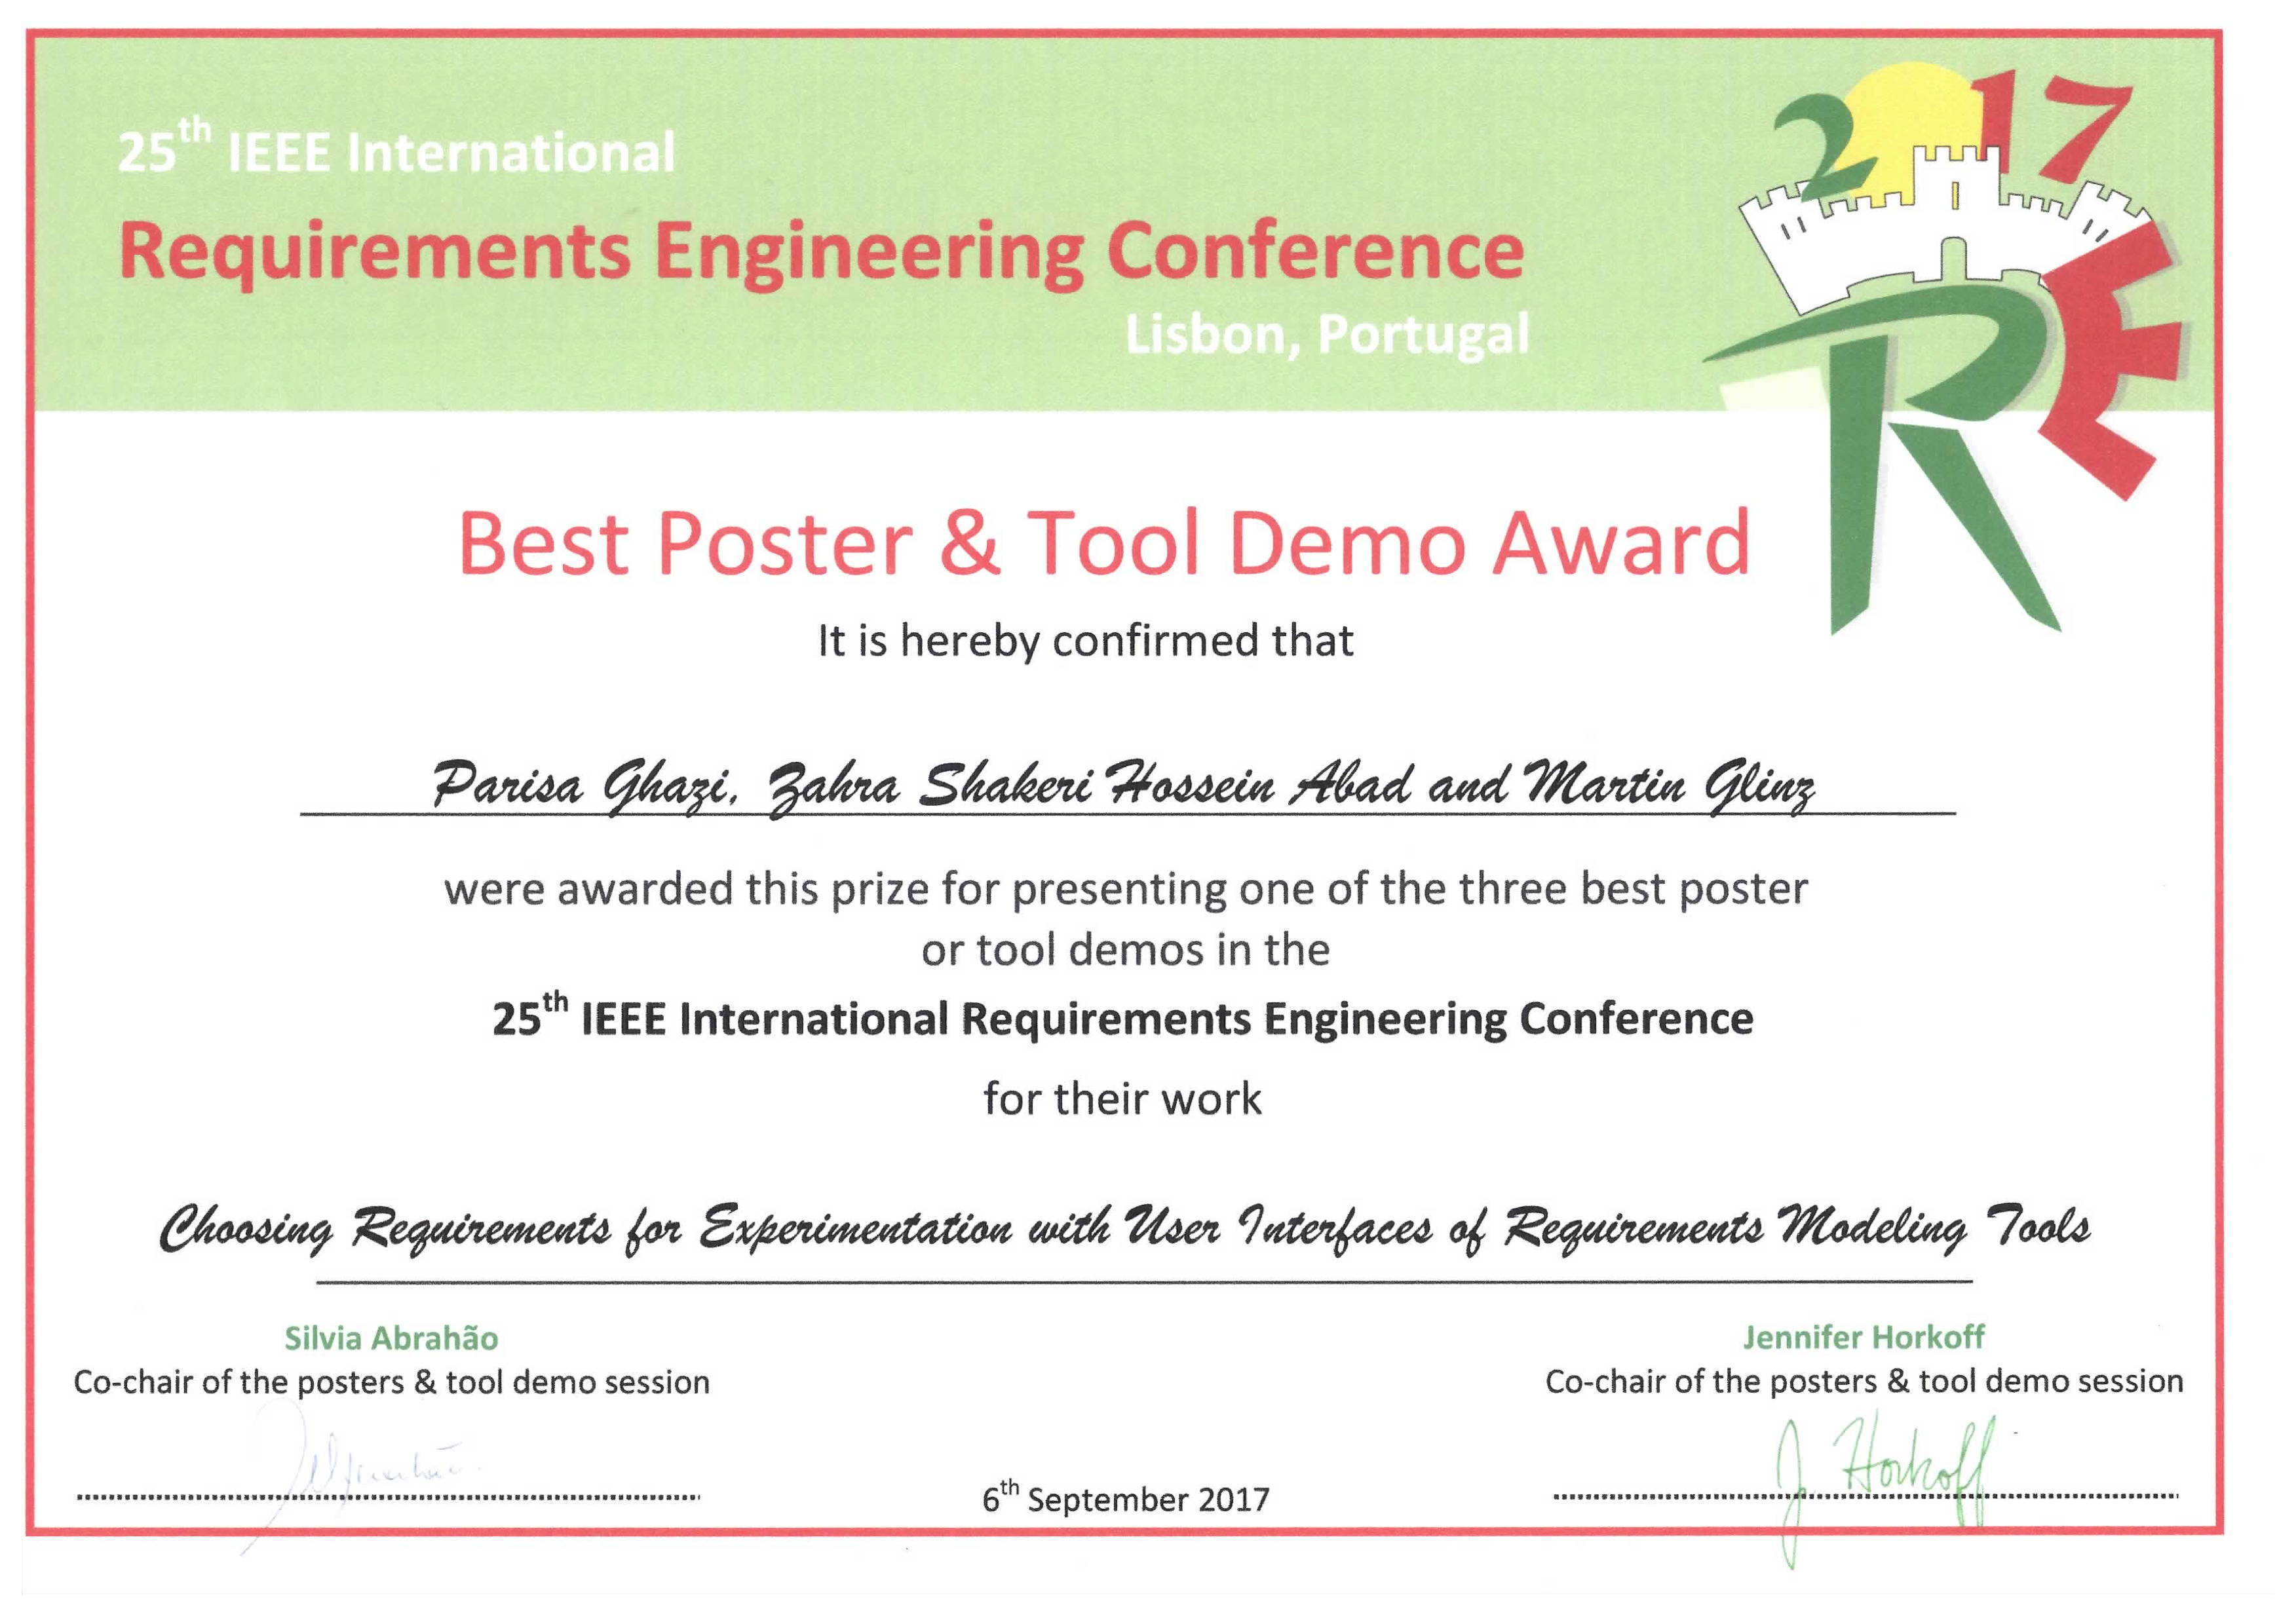 RE'17 Best Poster & Tool Demo Award Certificate